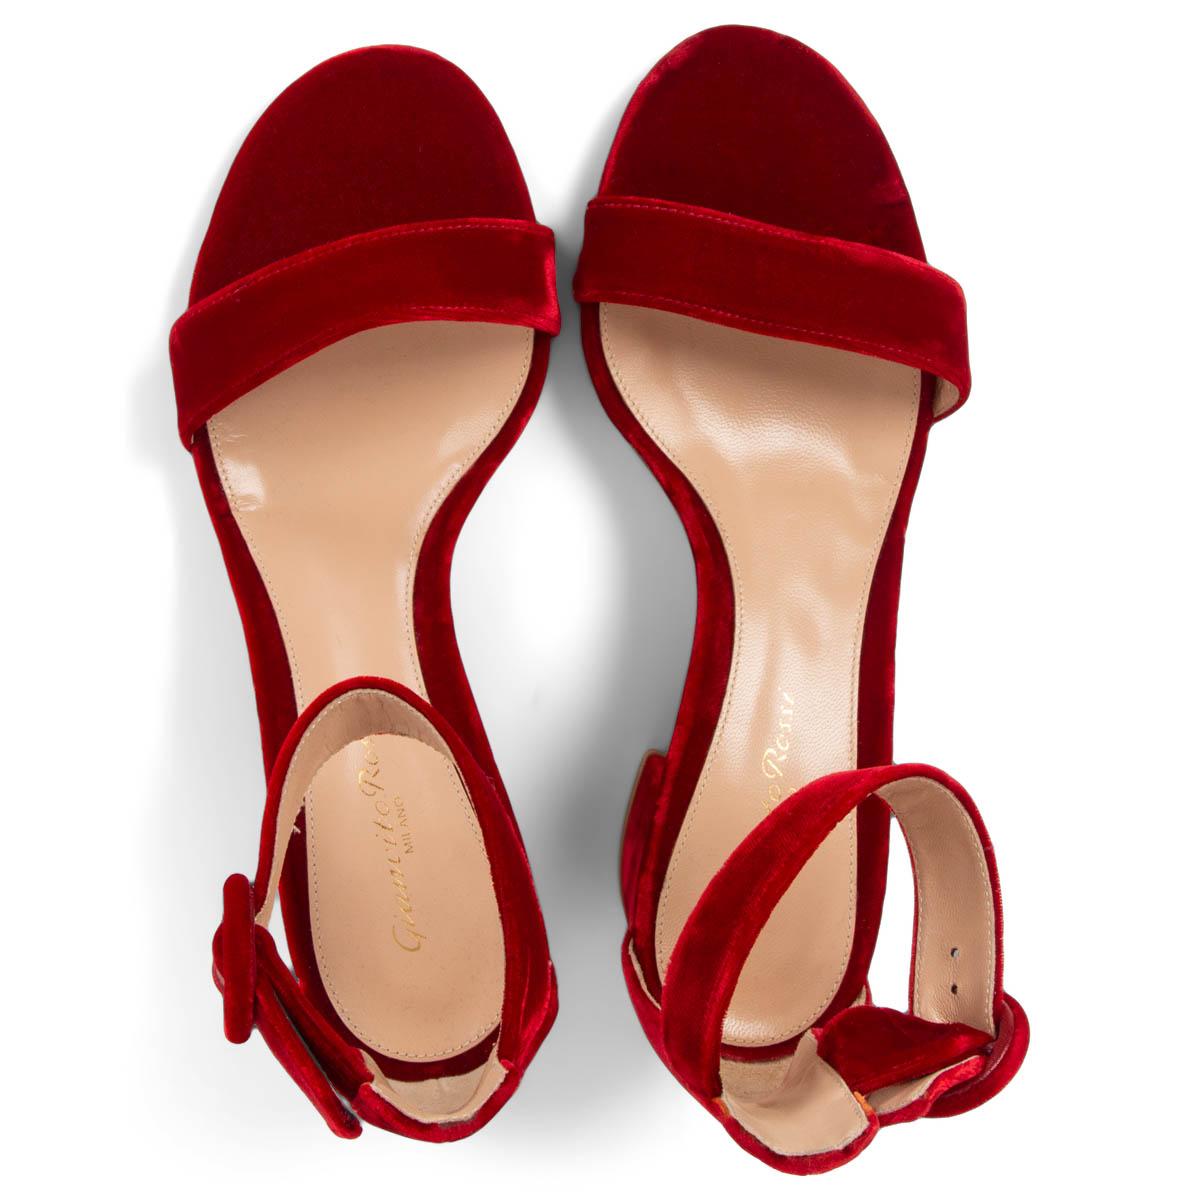 red velvet shoes heels